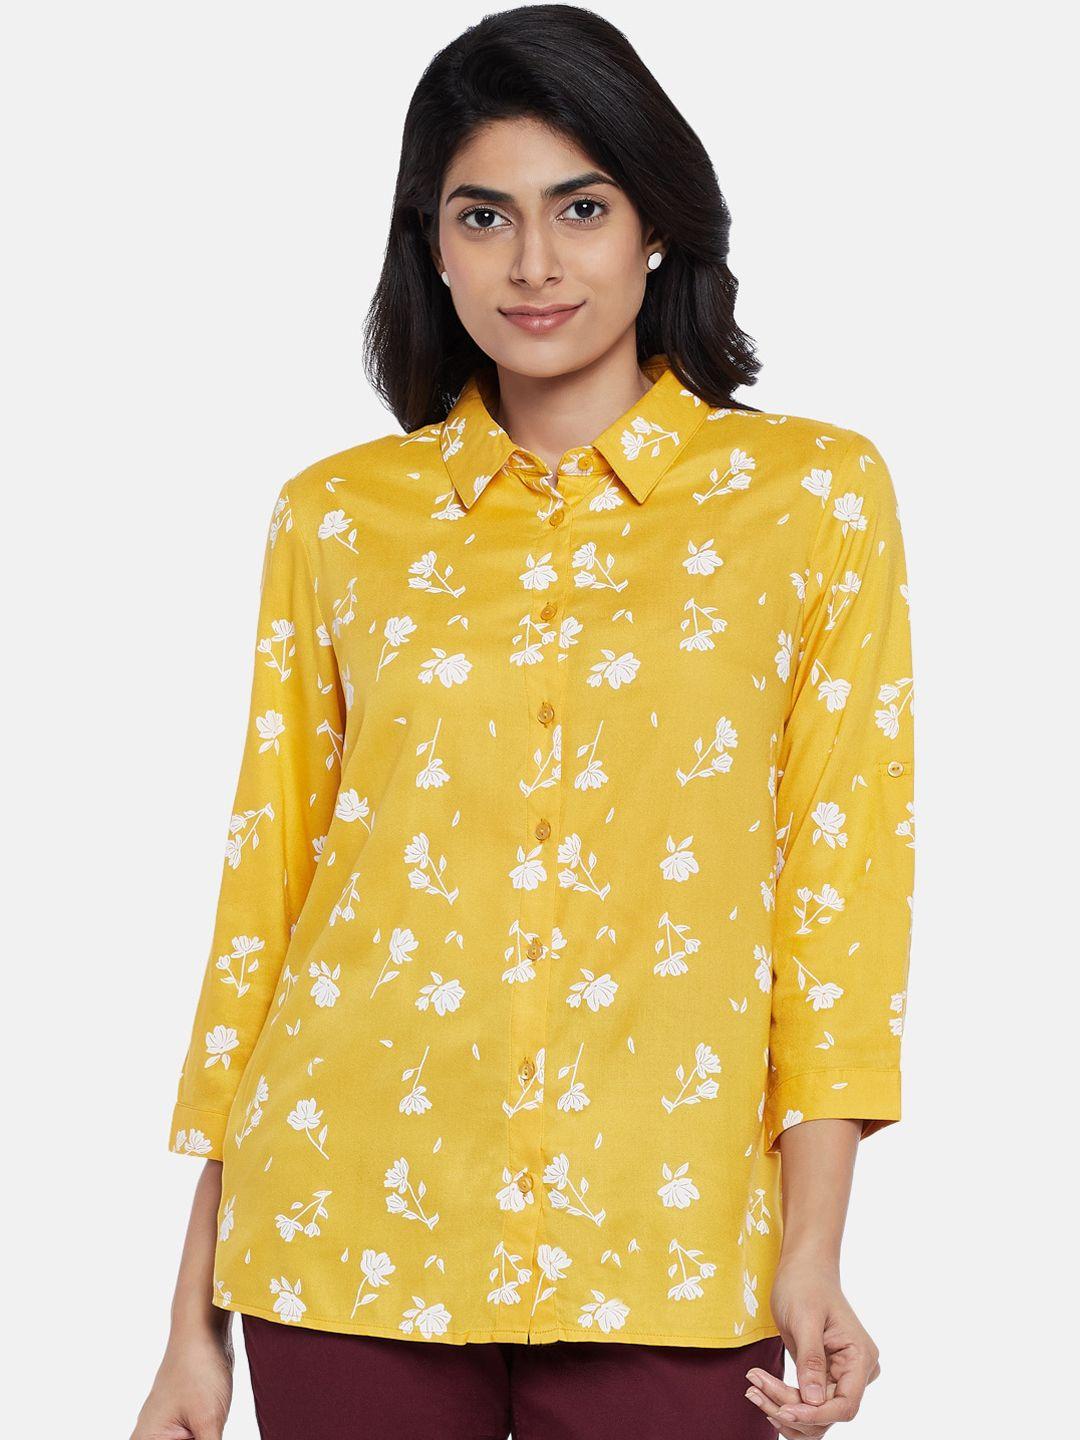 honey by pantaloons women mustard yellow & white regular fit floral printed casual shirt